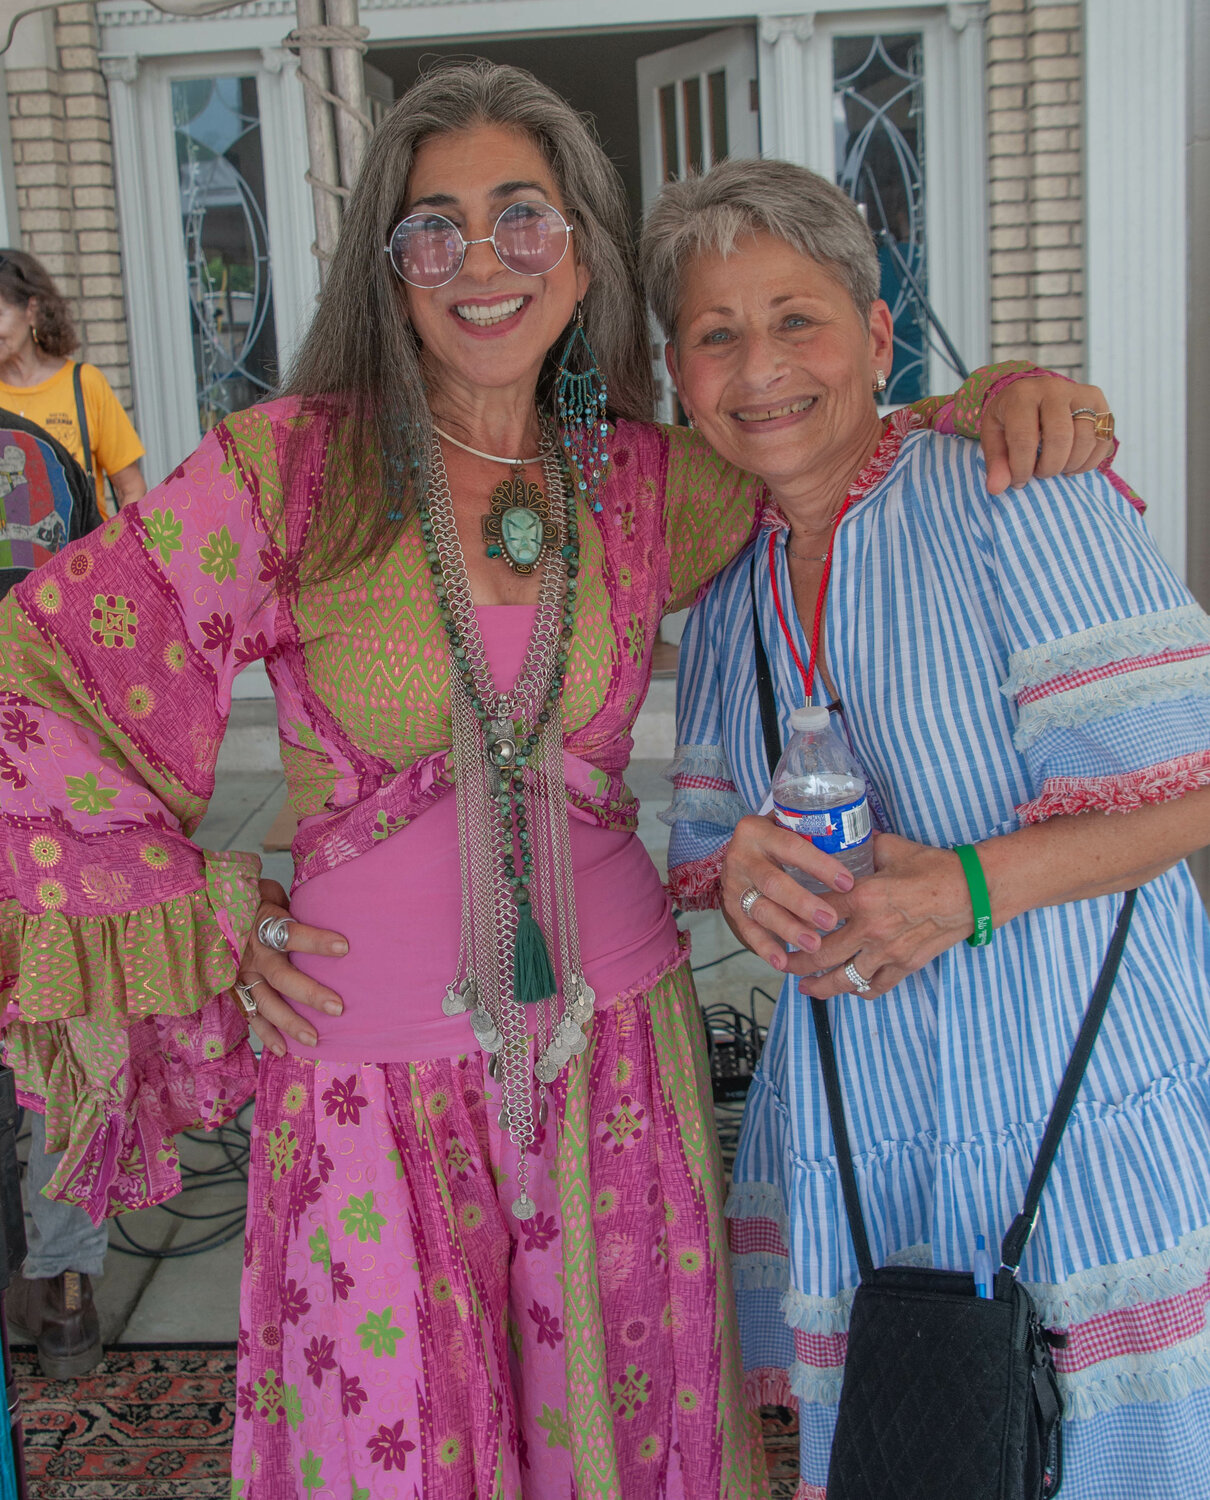 Entertainer extraordinaire Patti Greco Sunshine, left, and Borscht Belt Museum VP Robin Cohen Kauffman were all smiles at the first-ever Borscht Belt Festival in Ellenville, NY last weekend.